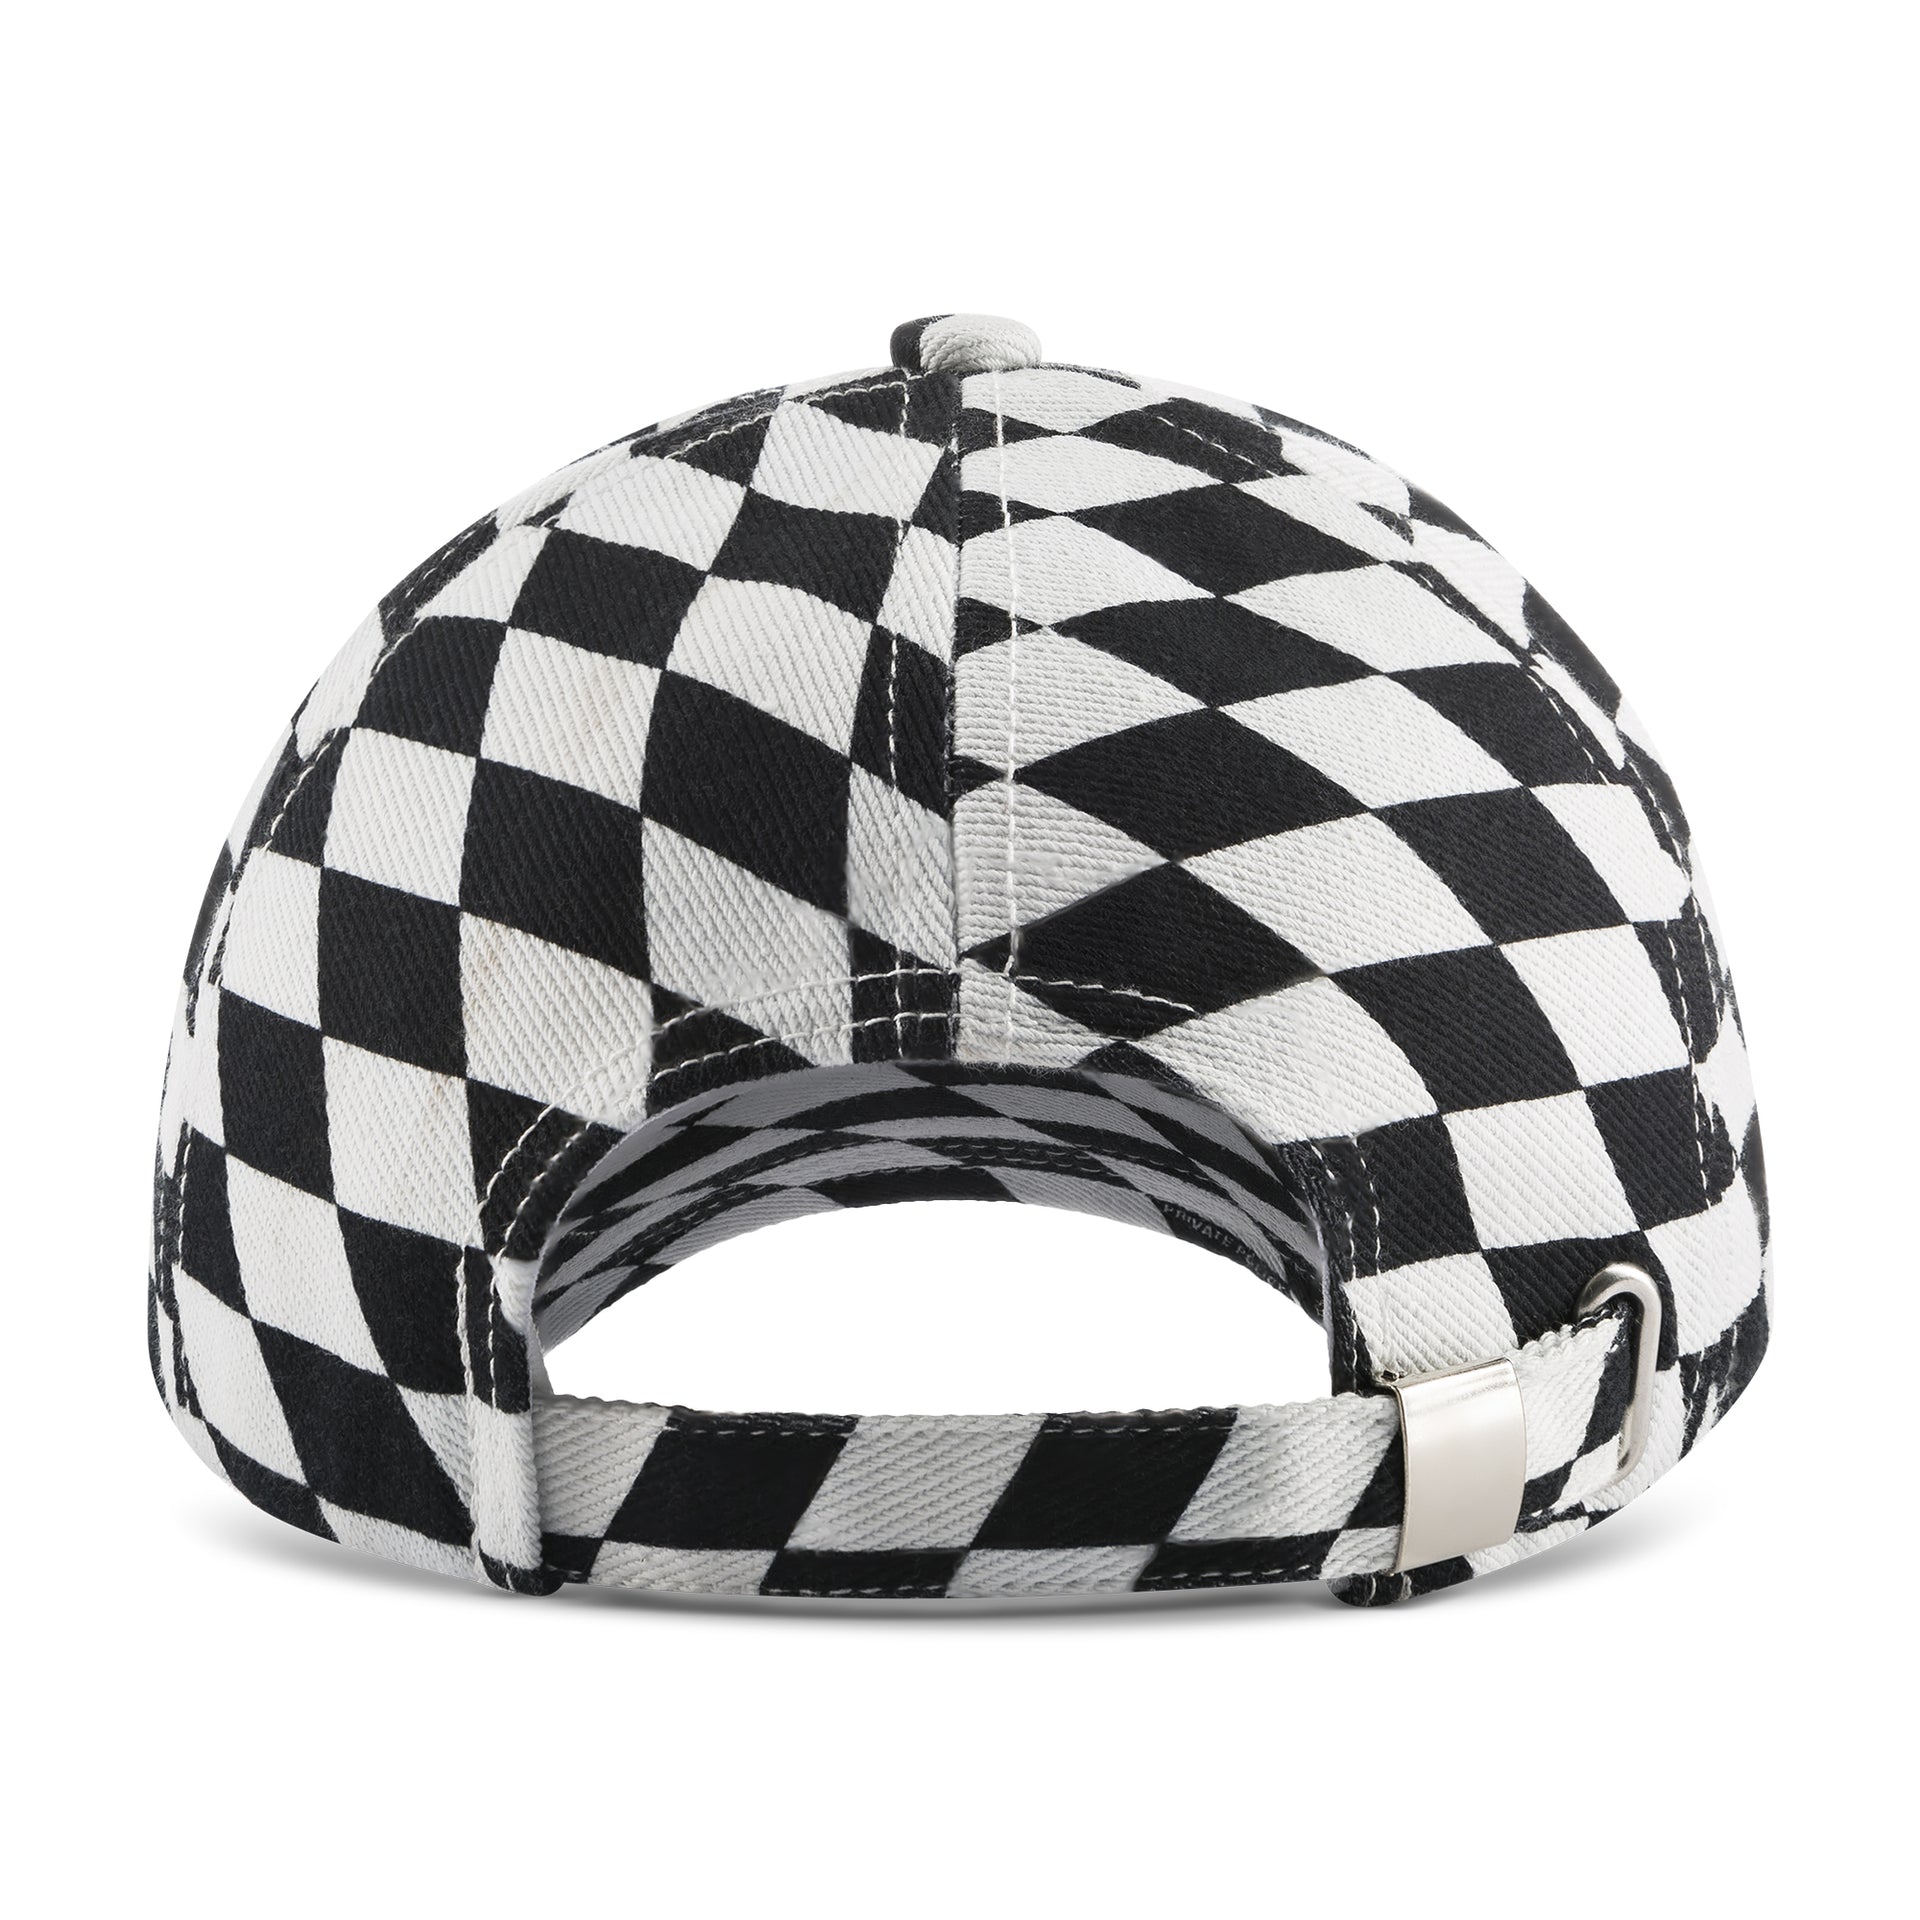 PXL Print Ring Cap - Black and White Checker